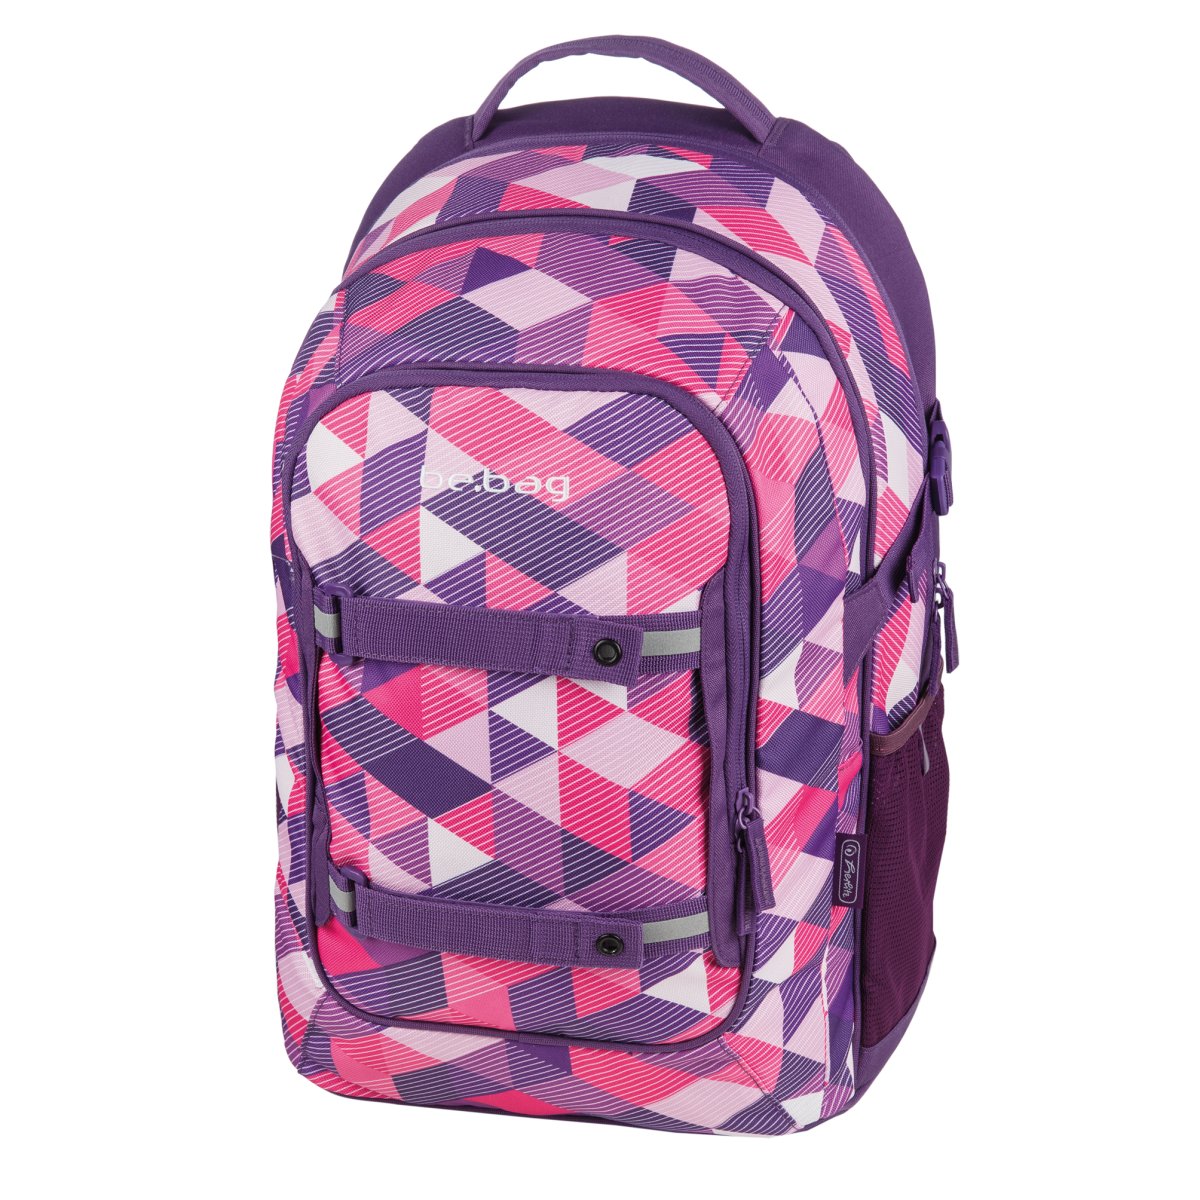 school backpack be.bag Purple - Checked Herlitz beat